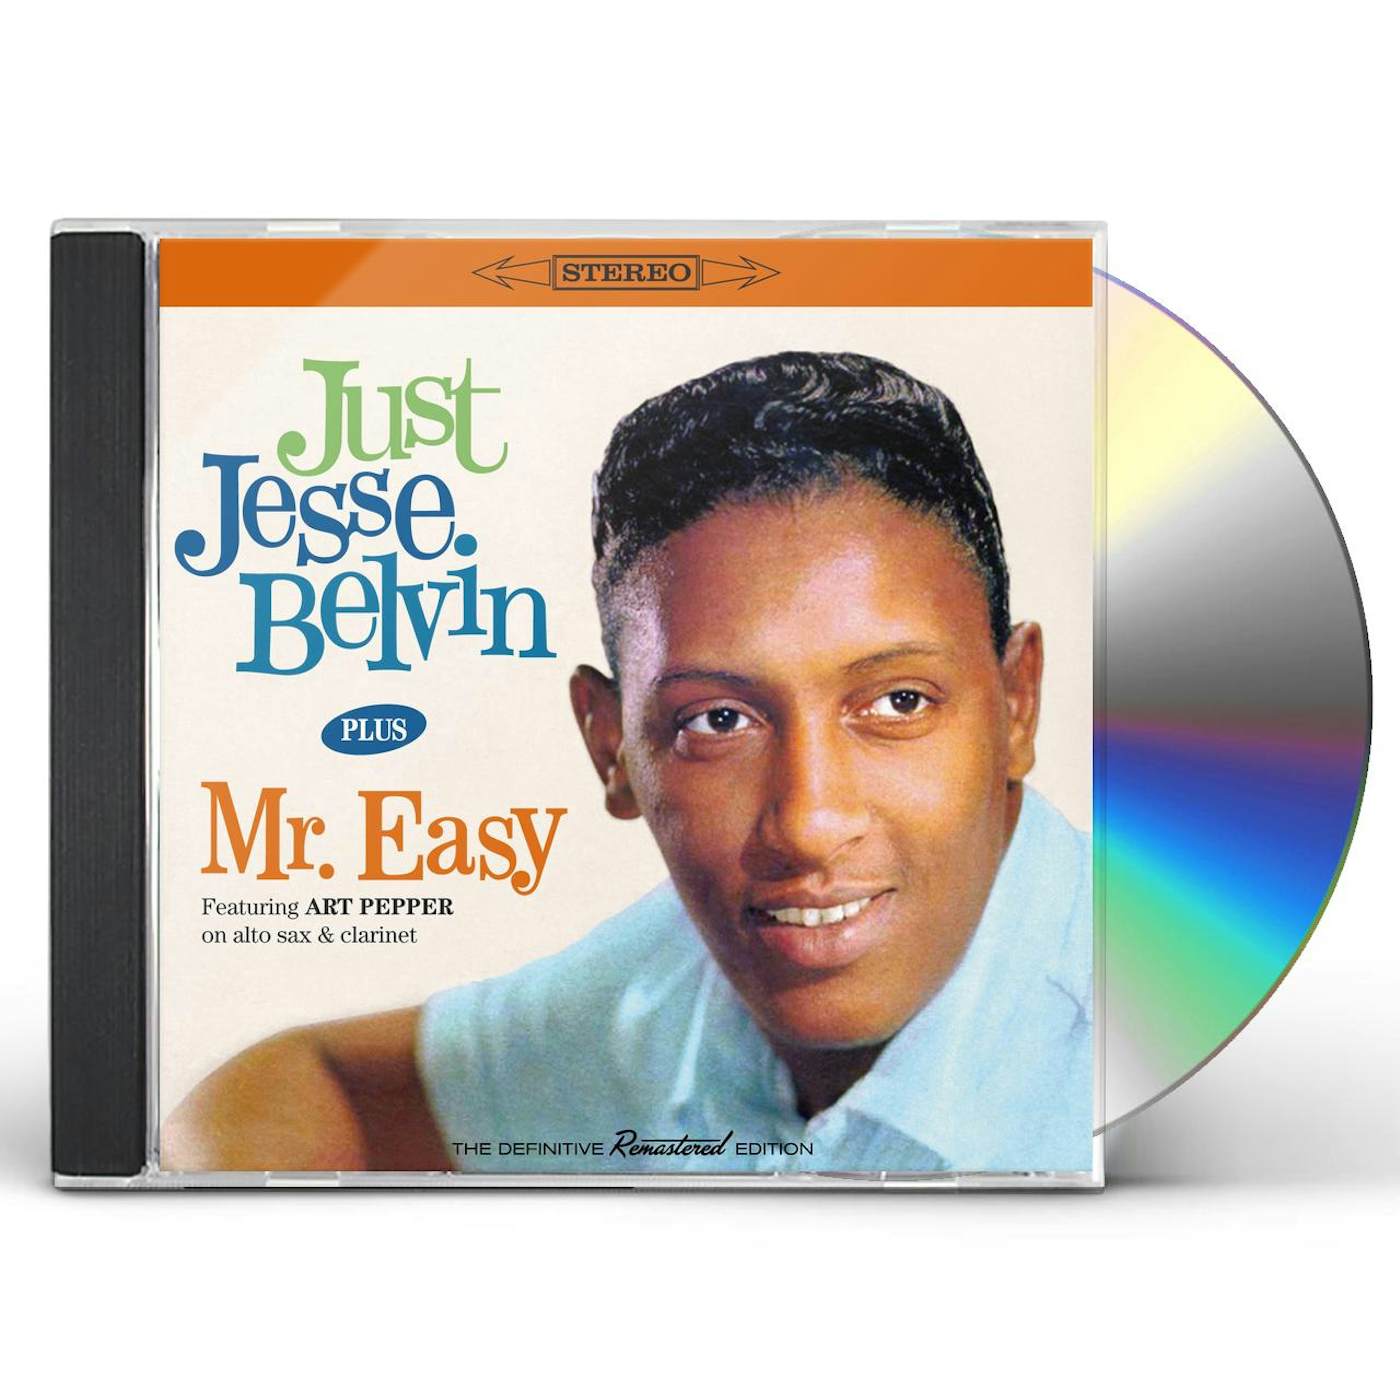 JUST JESSE BELVIN + MR. EASY CD